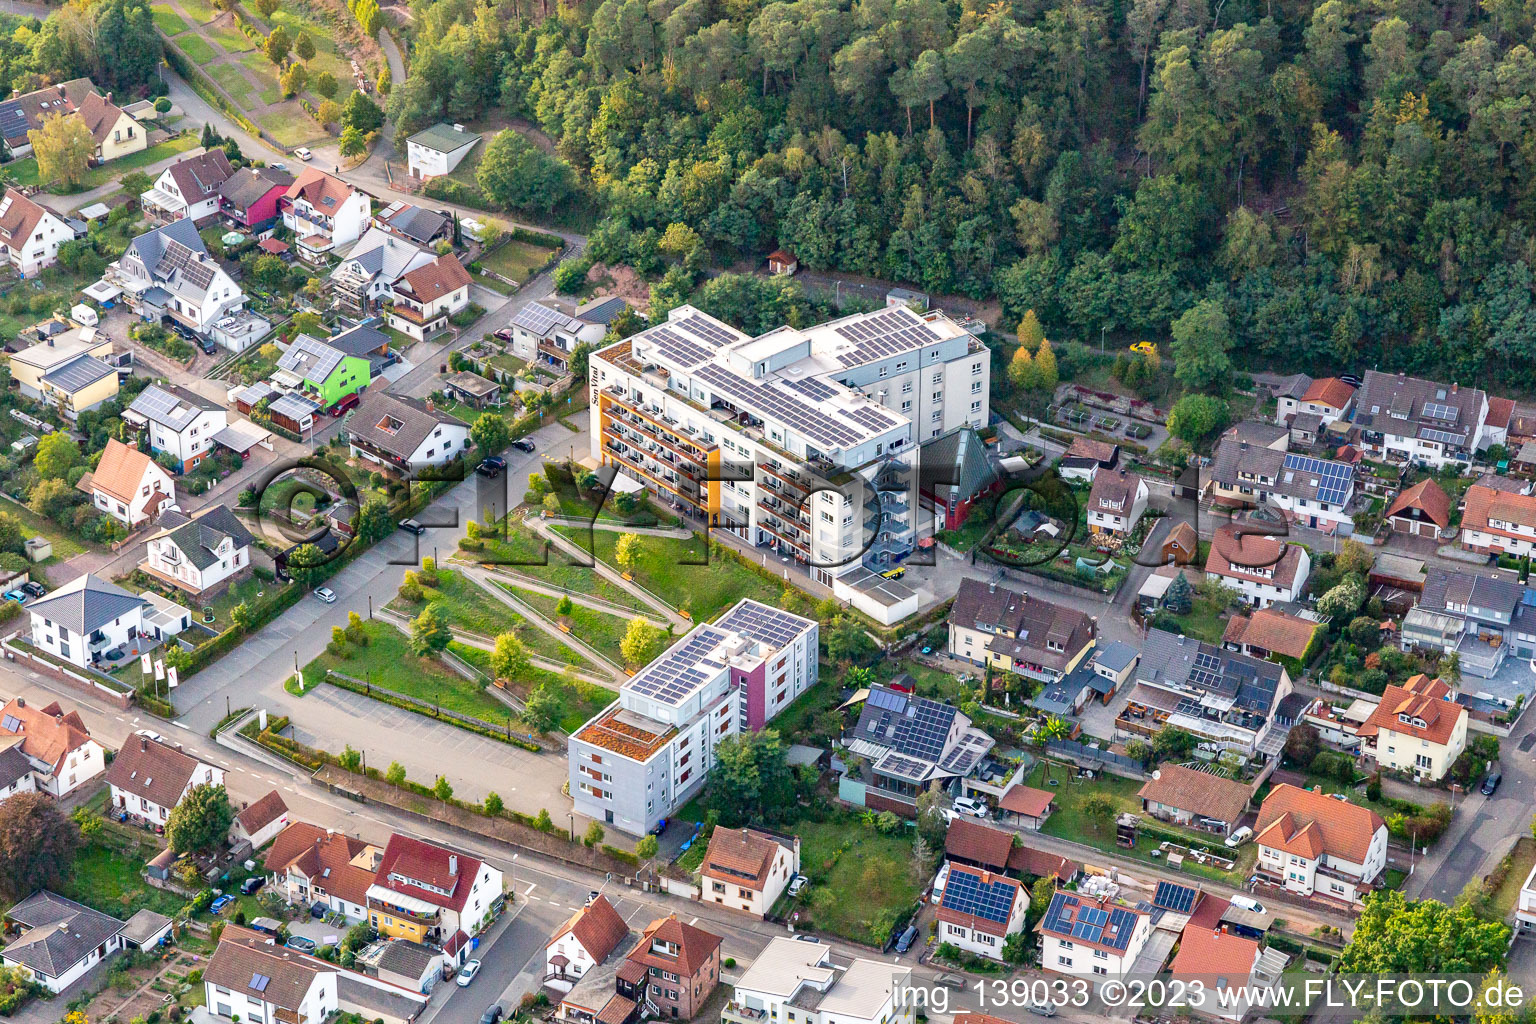 SenVital senior citizens and care center Dahn Dreiburgenblick in Dahn in the state Rhineland-Palatinate, Germany